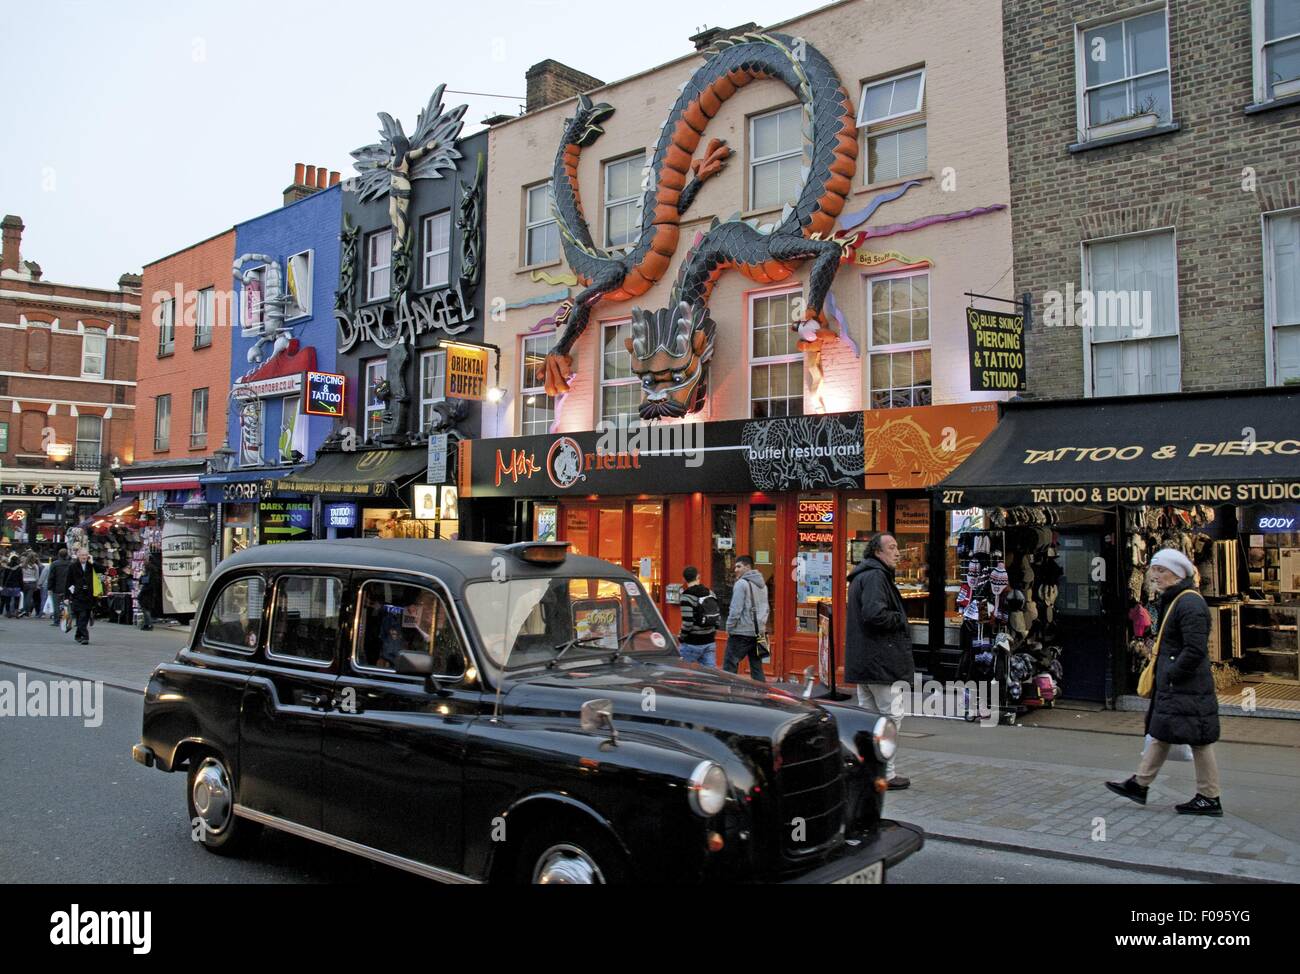 Black taxi cab on High Street, Camden Town, London, UK Stock Photo